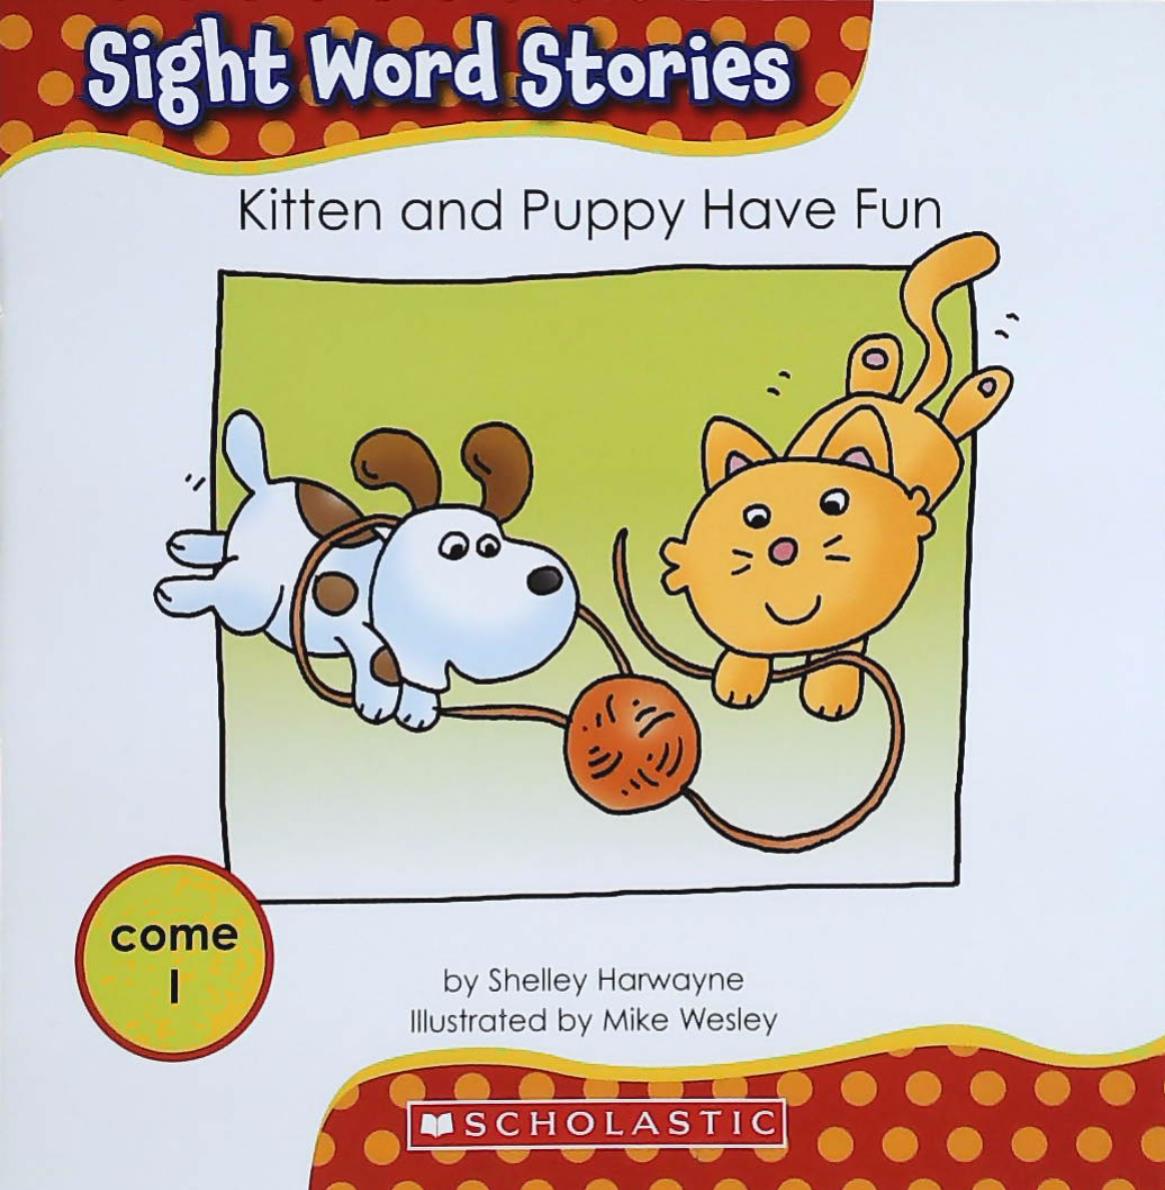 Livre ISBN 0545167655 Sight Word Stories : Kitten and Puppy Have Fun (Shelley Harwayne)